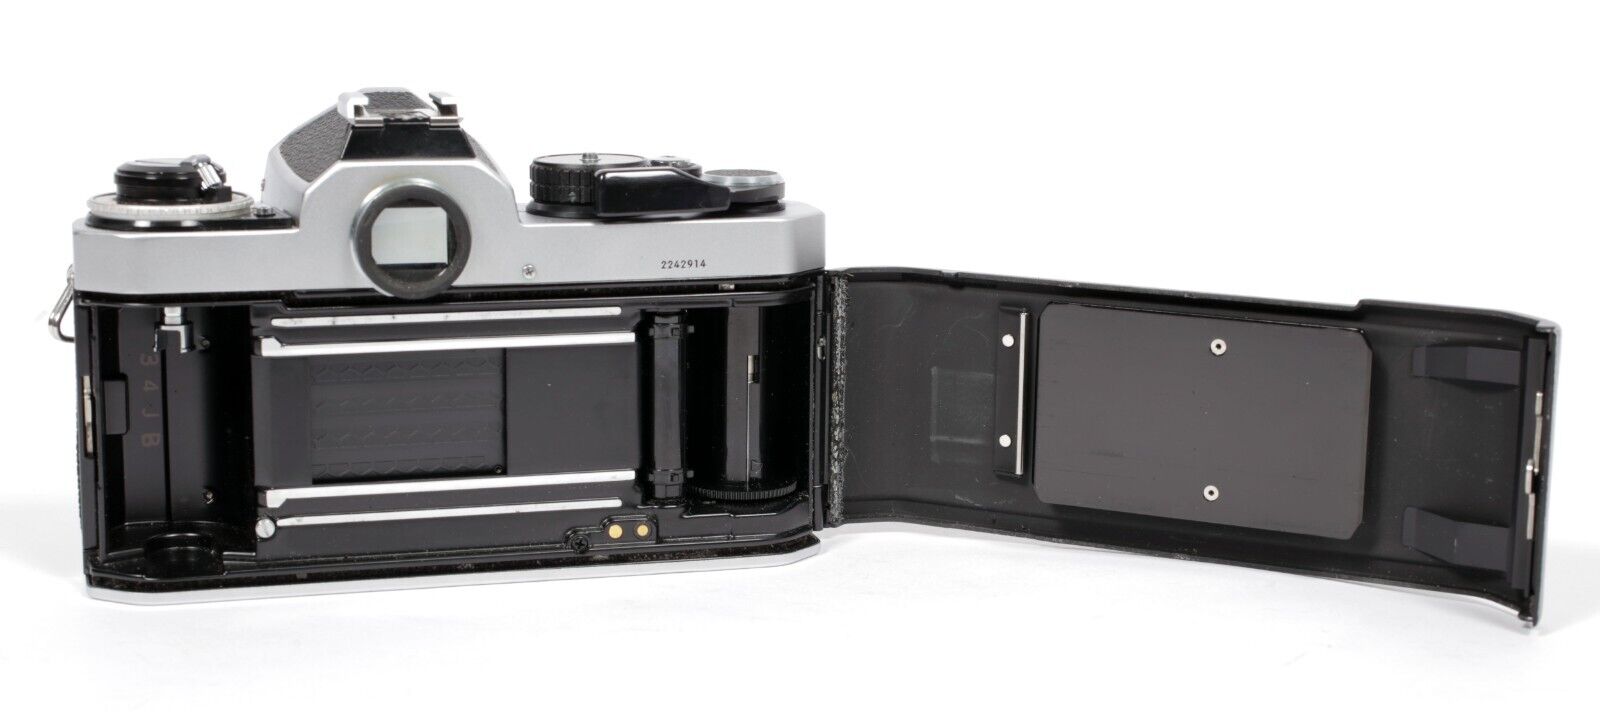 Nikon FE2 35mm SLR Film Camera with 50mm F1.8 lens #914 | CatLABS